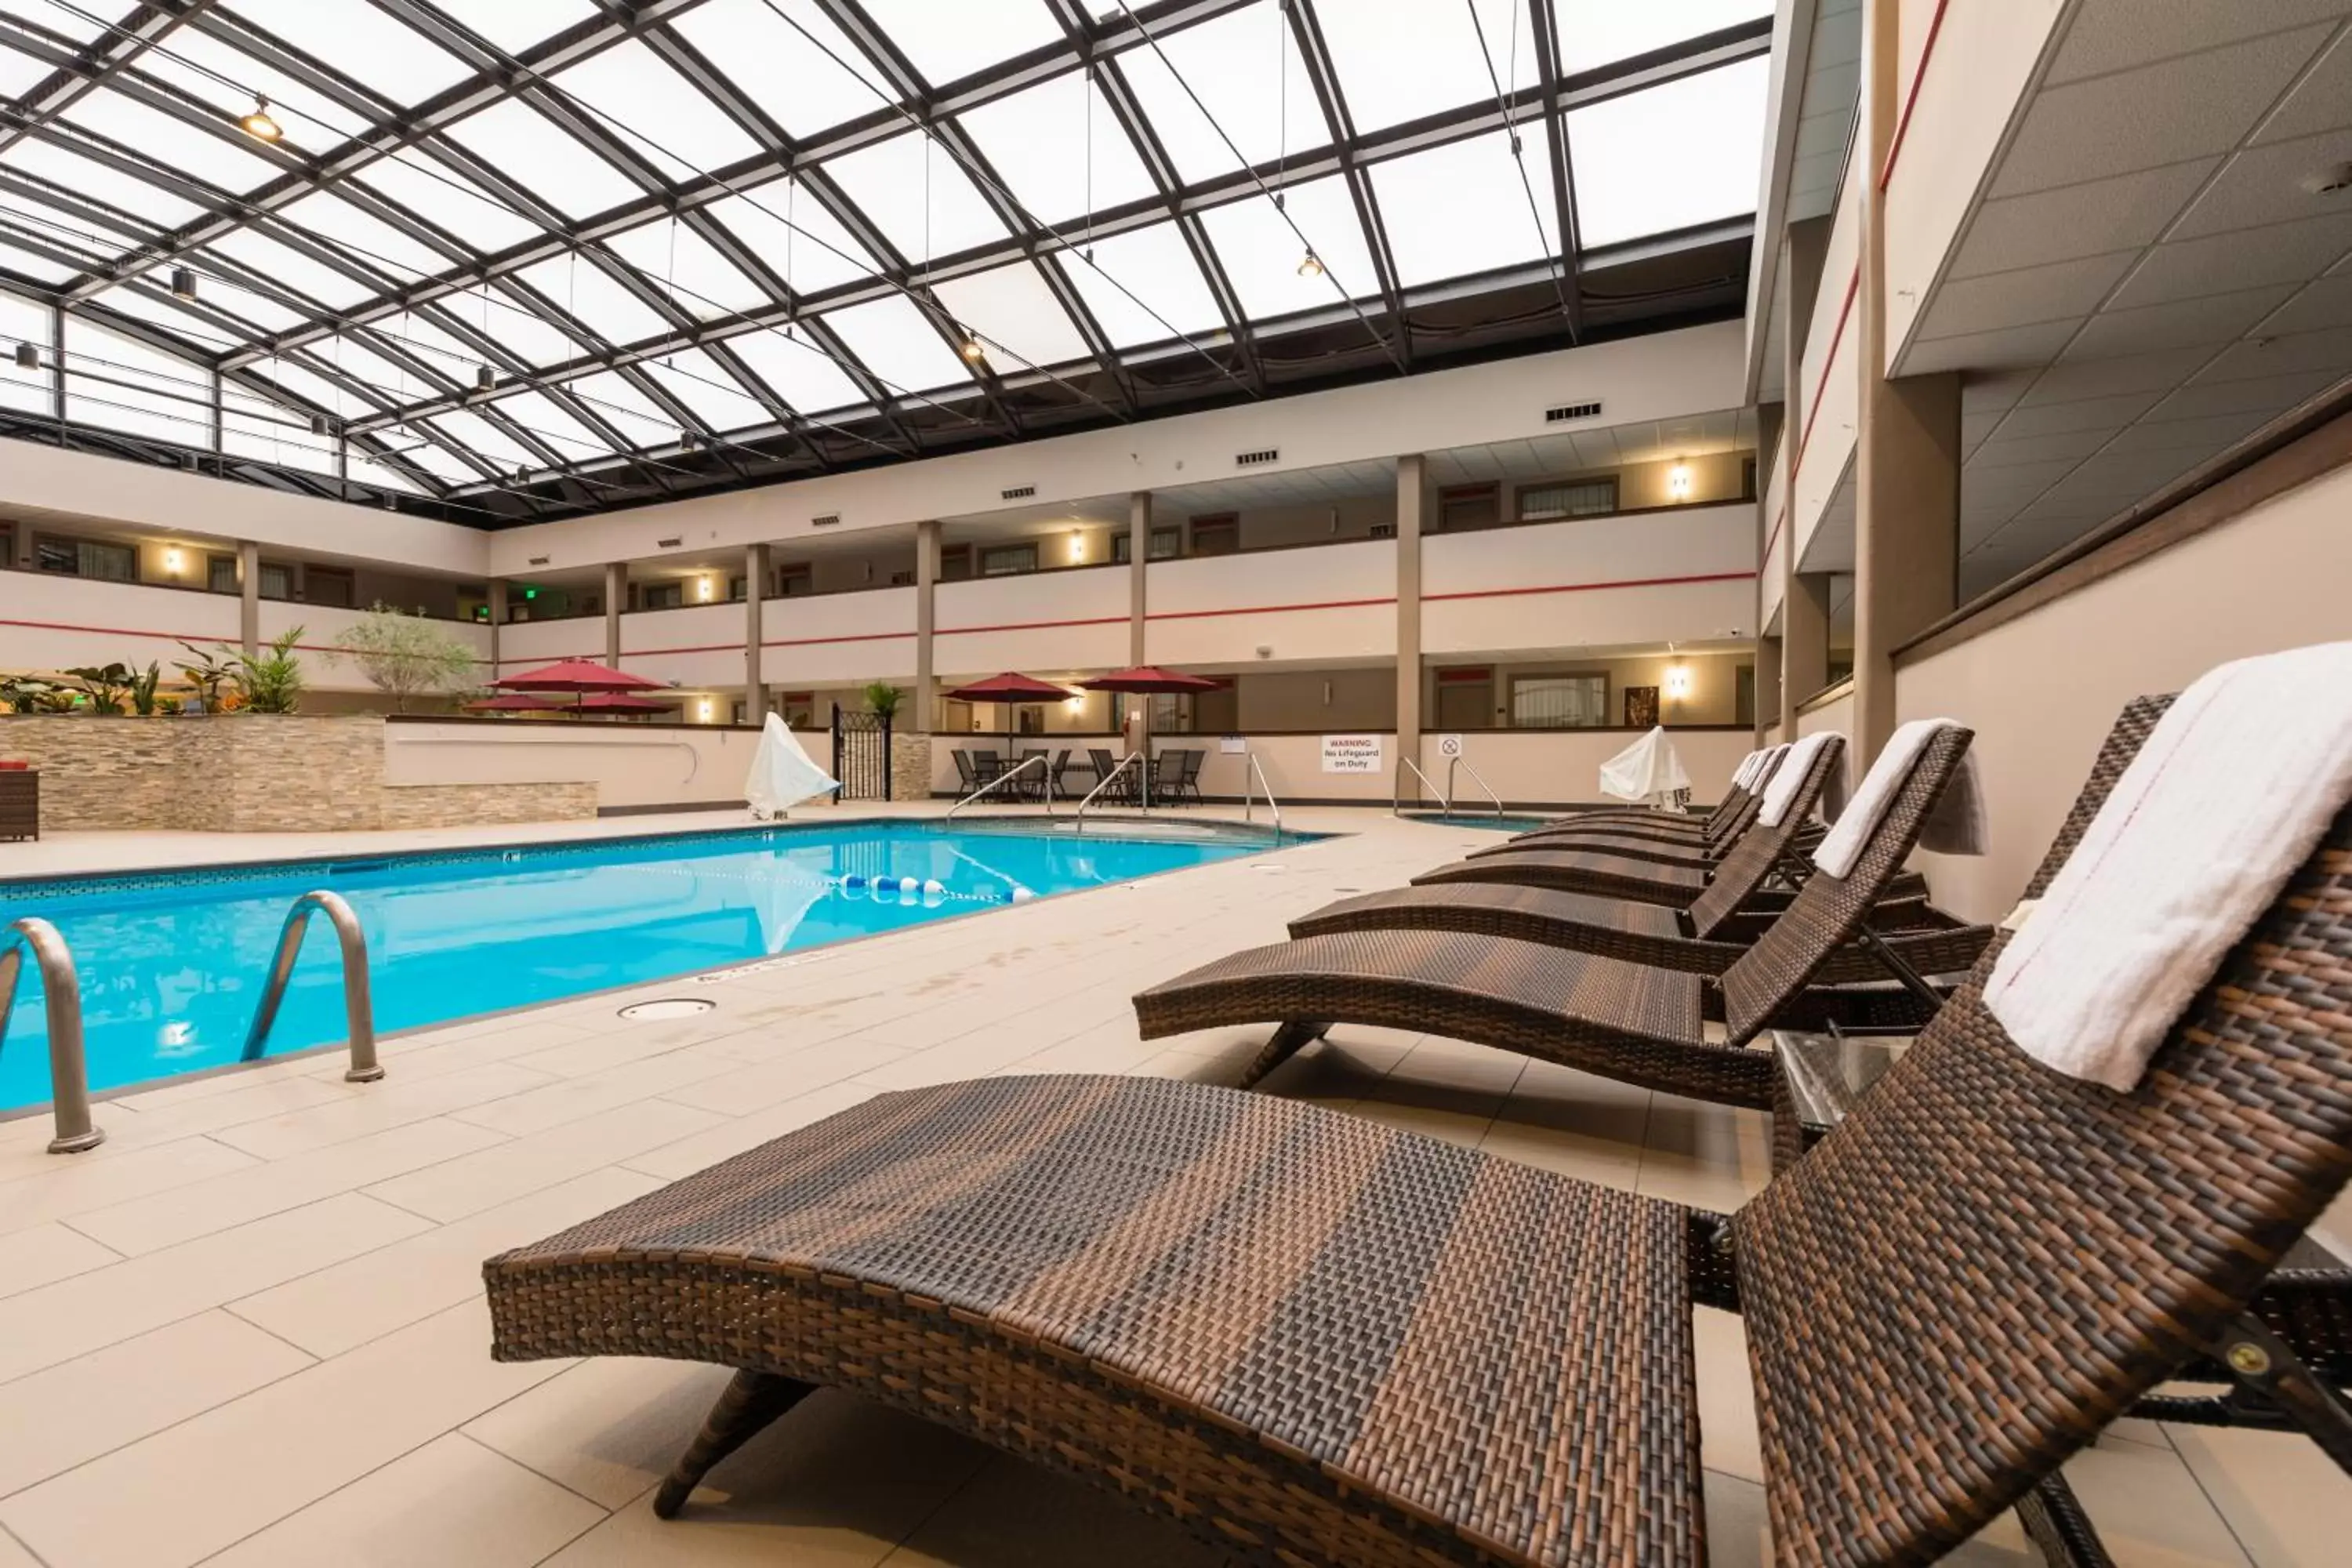 Swimming Pool in Brookfield- Milwaukee Hotel